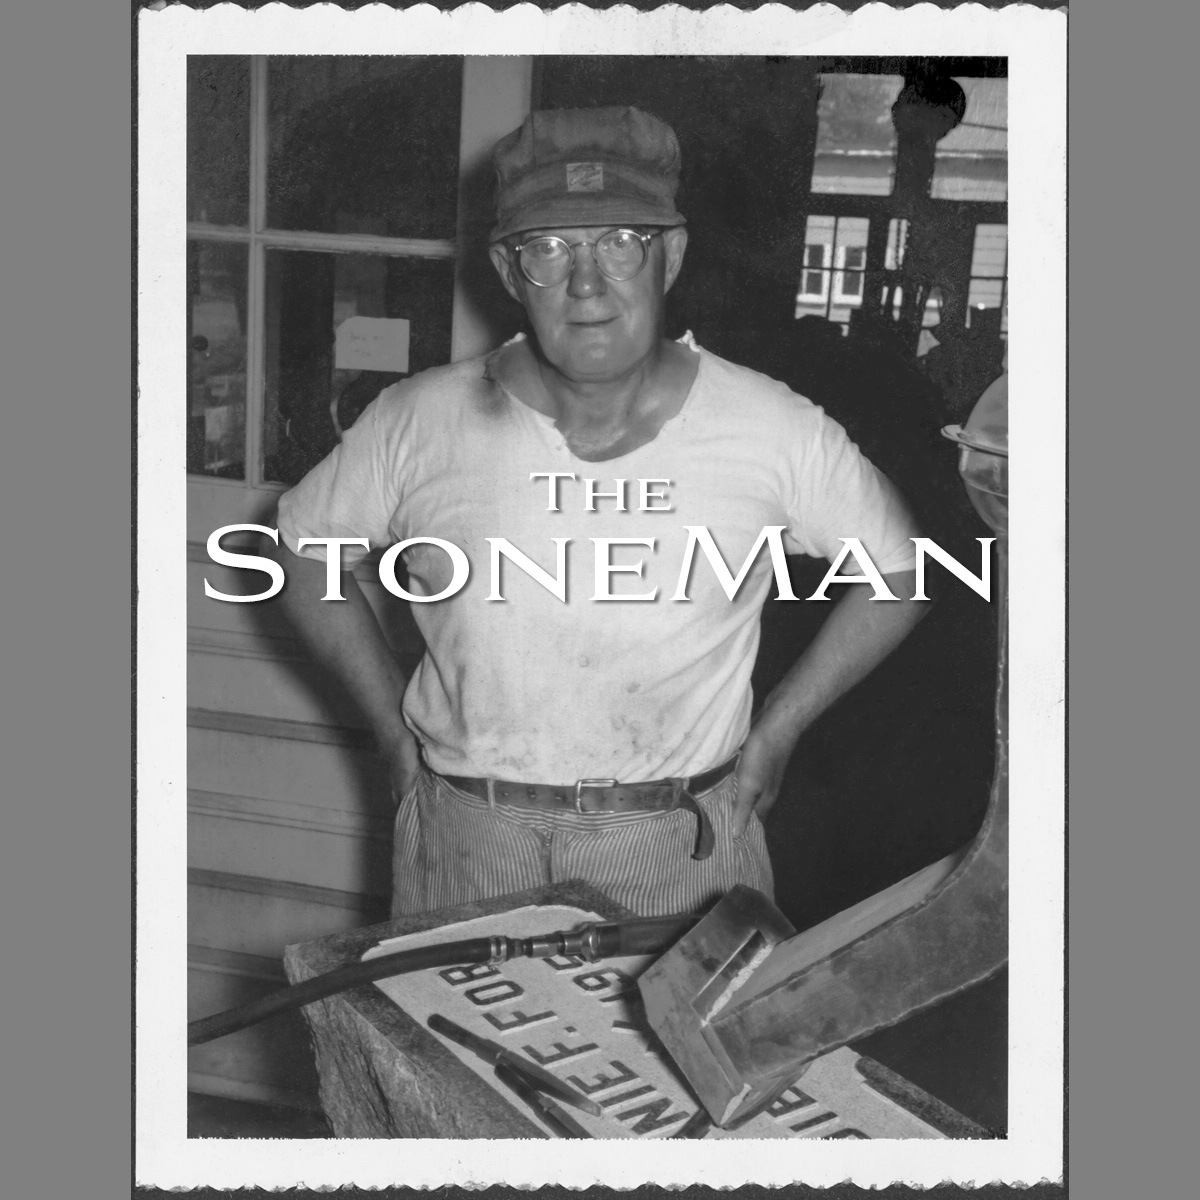 The StoneMan, A Documentary Film